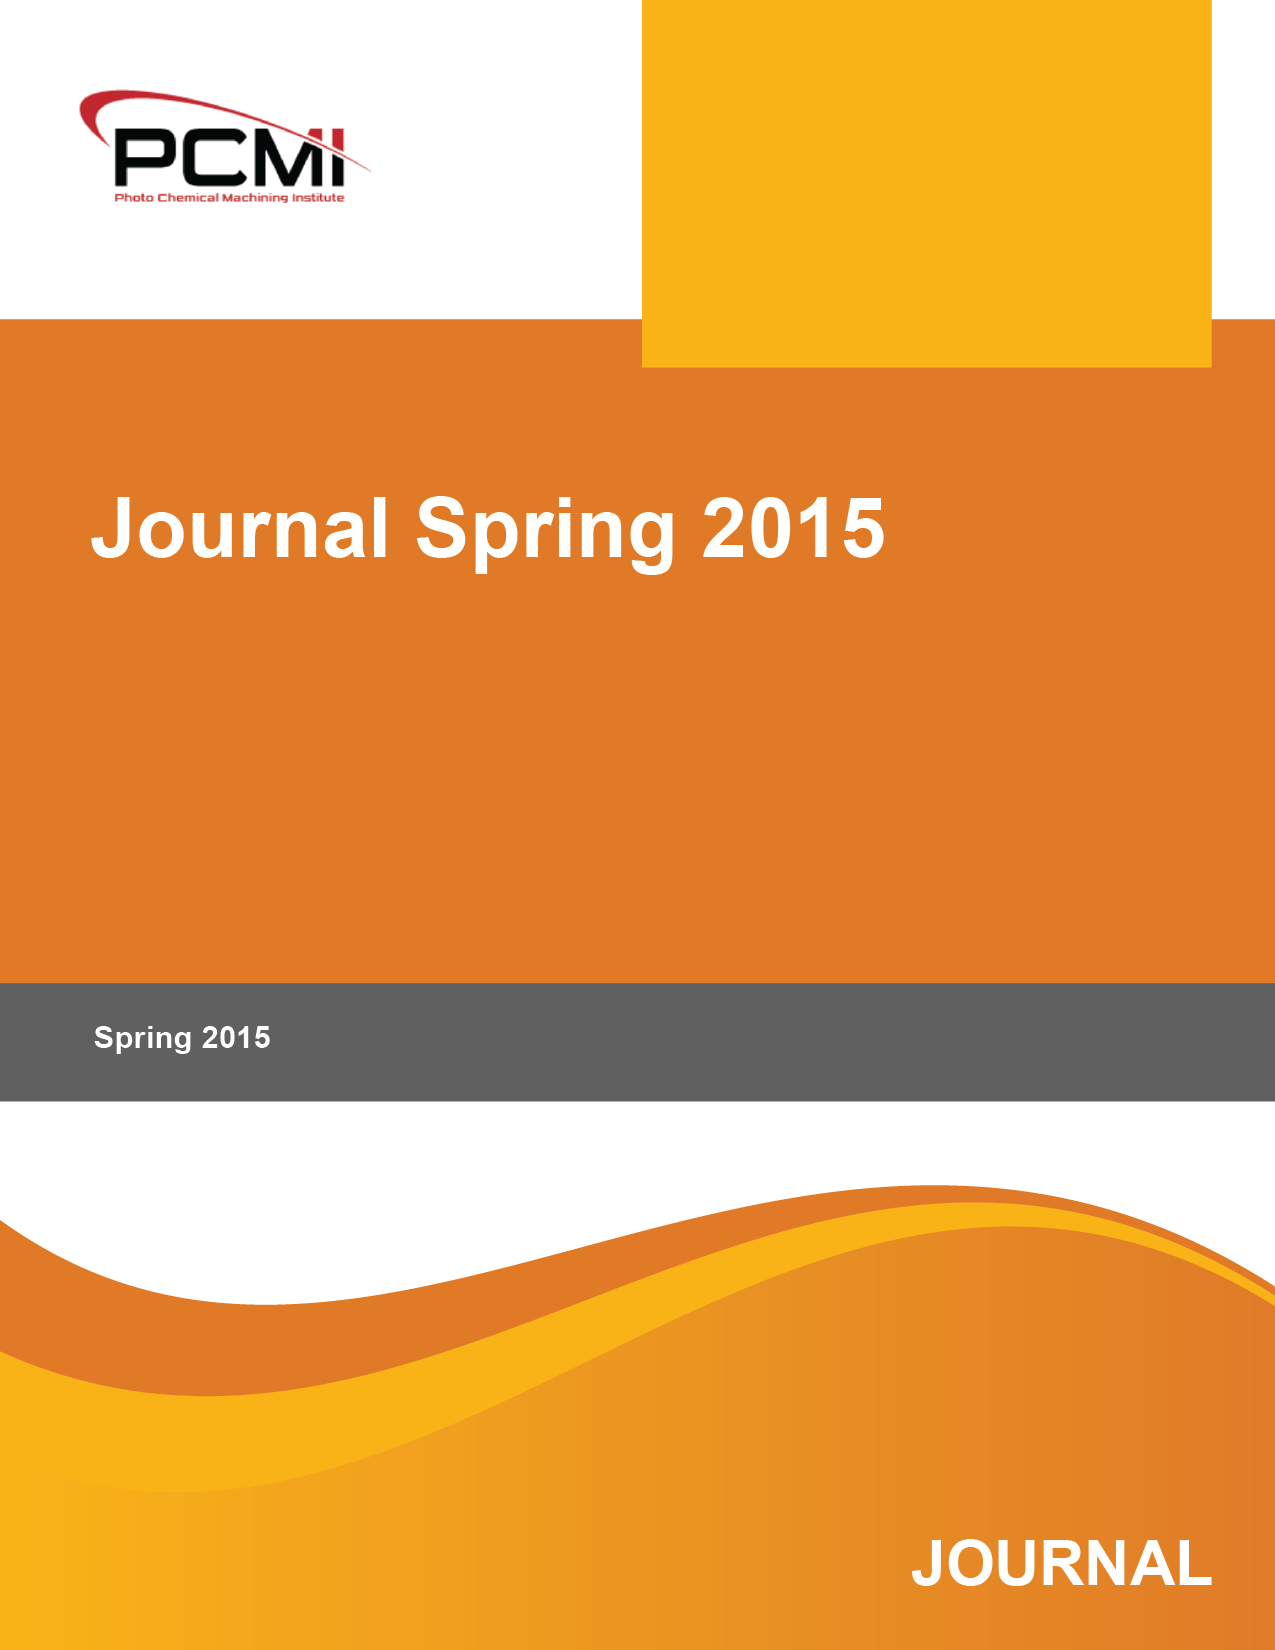 2015 Spring Journal